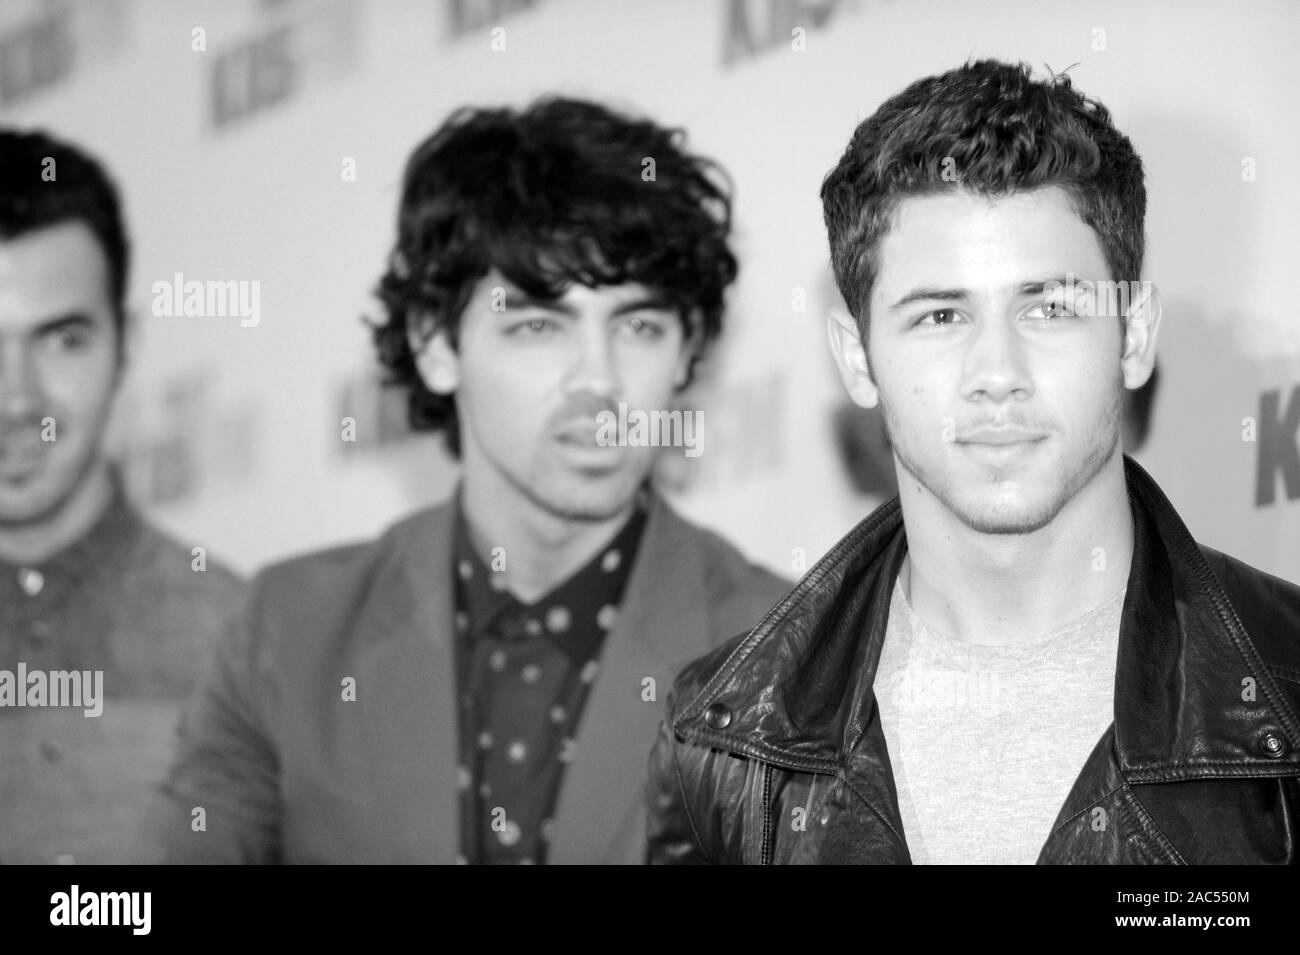 (L - R) Kevin, Joe und Nick Jonas der Jonas Brothers sorgen die KIIS FM 2012 Jingle Ball bei Nokia Theatre L.A. Live am 1. Dezember in Los Angeles, Kalifornien 2012. Stockfoto